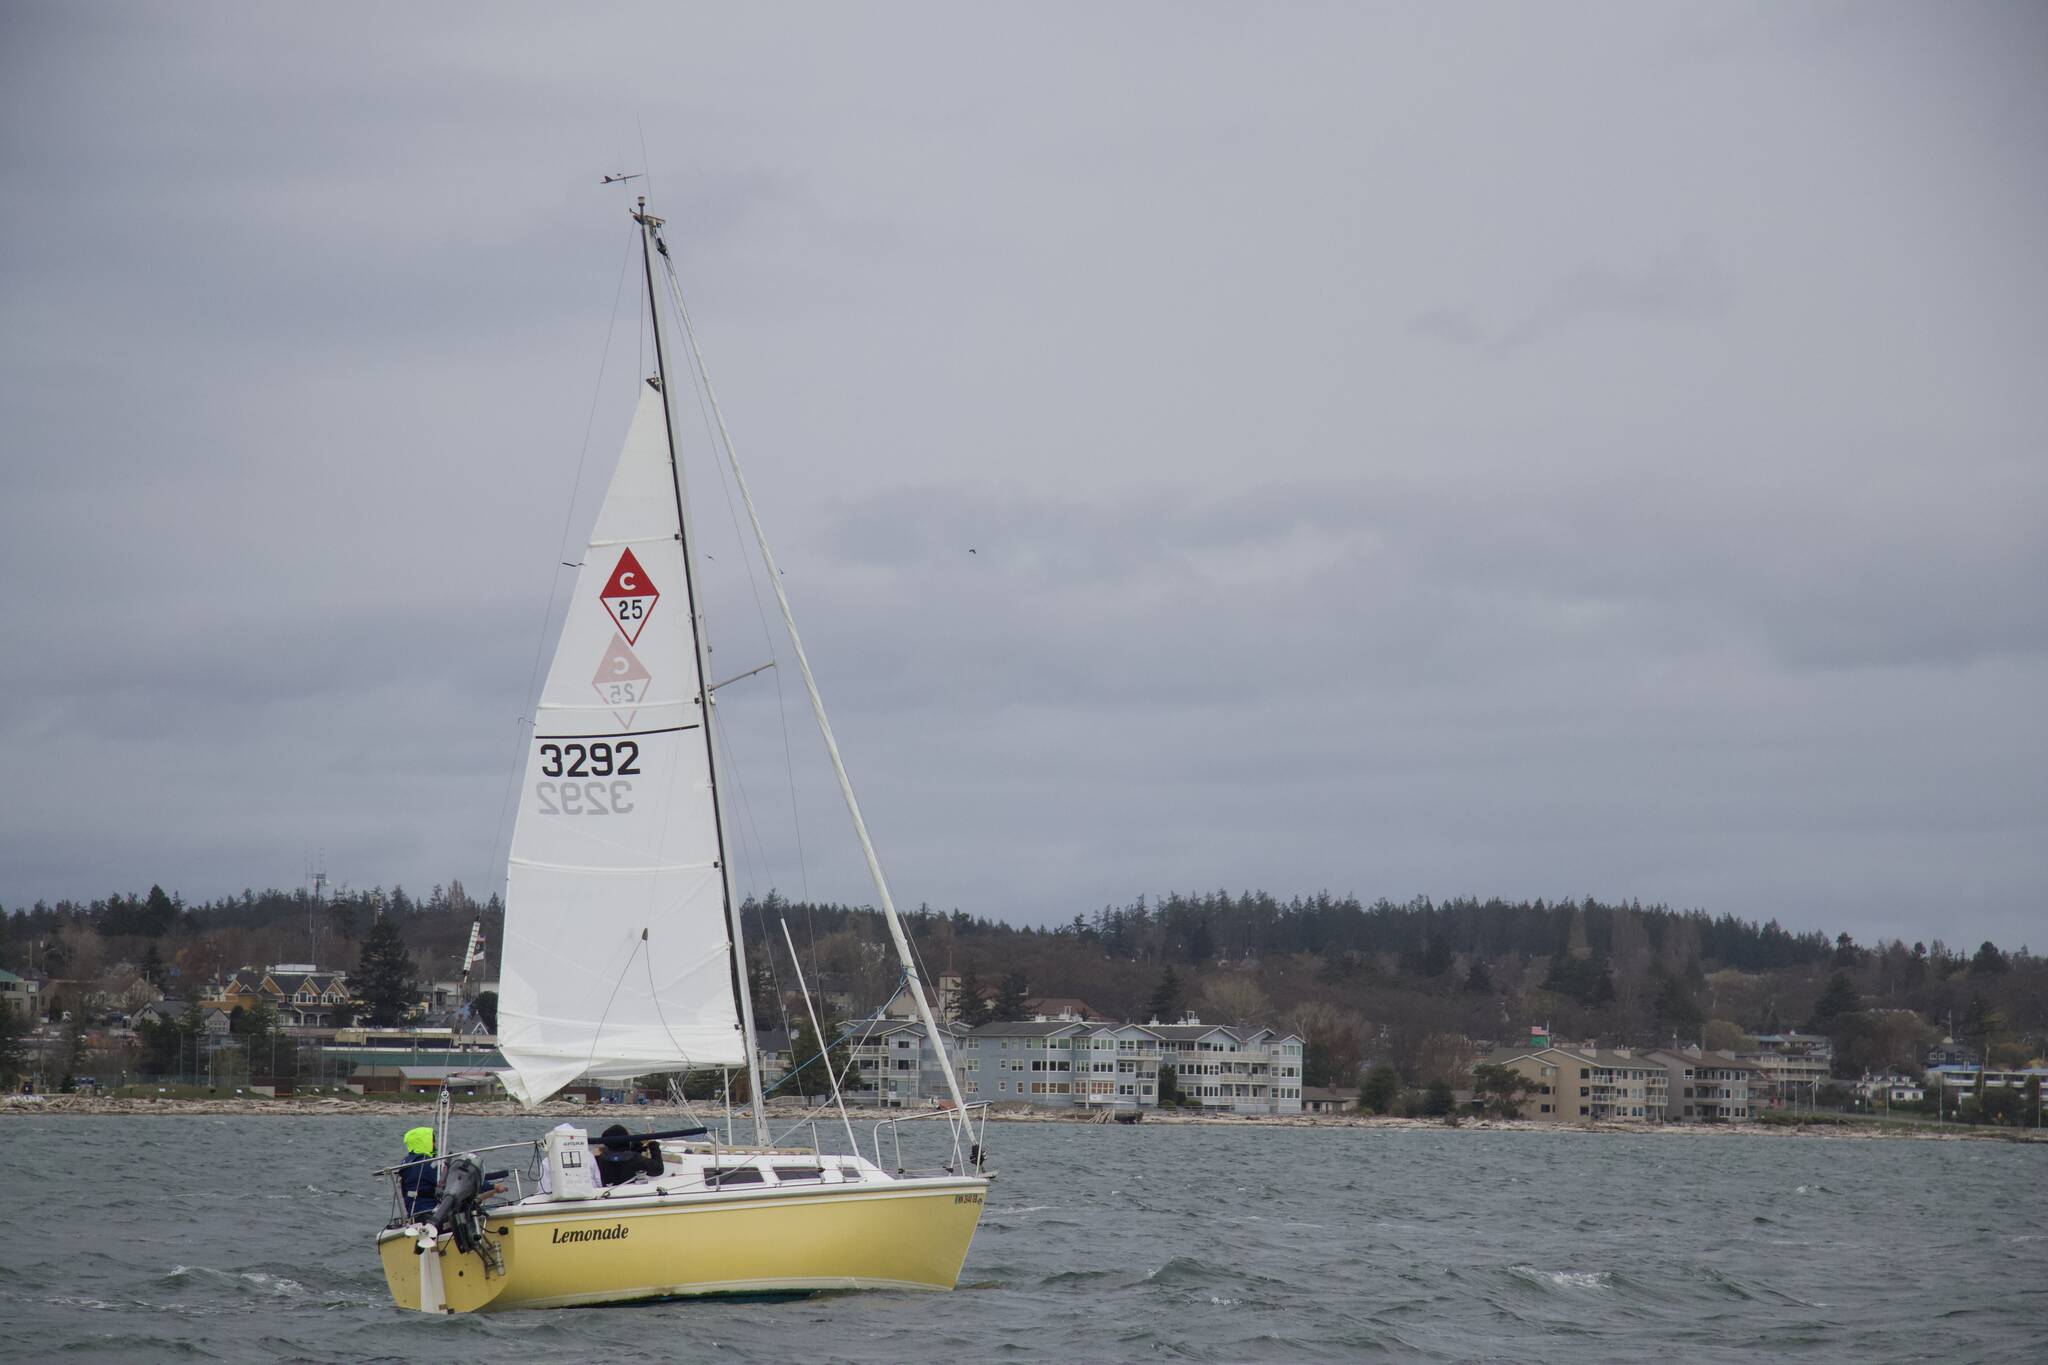 A San Jaun 24 sailboat named “Lemonade” before an Oak Harbor Yach Club race. (Photo by Rachel Rosen/Whidbey News-Times)